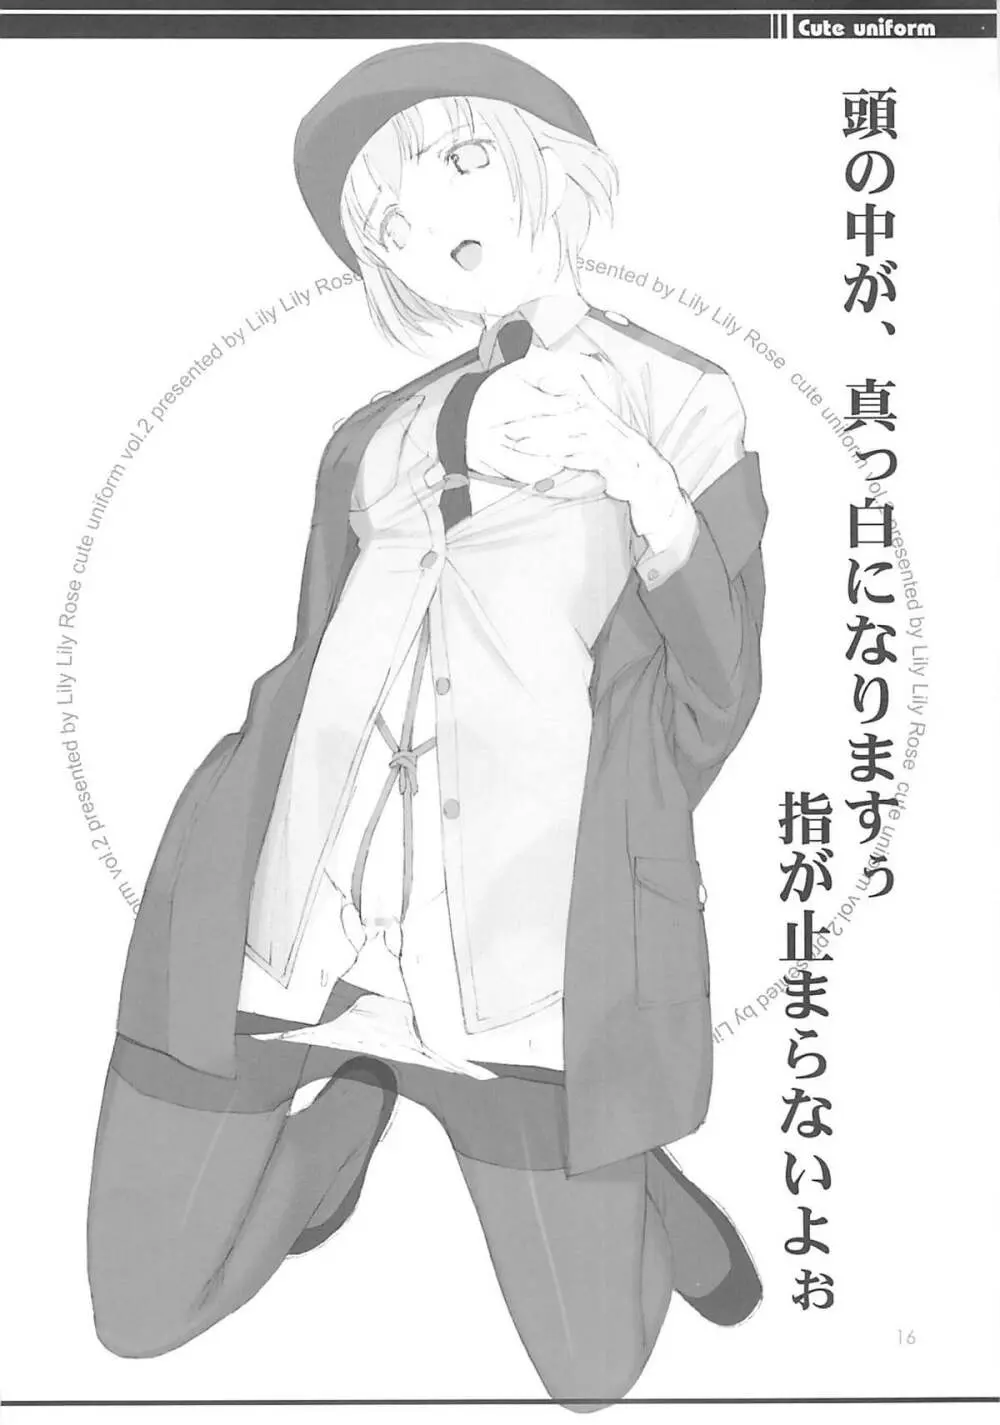 cute uniform vol. 02 15ページ